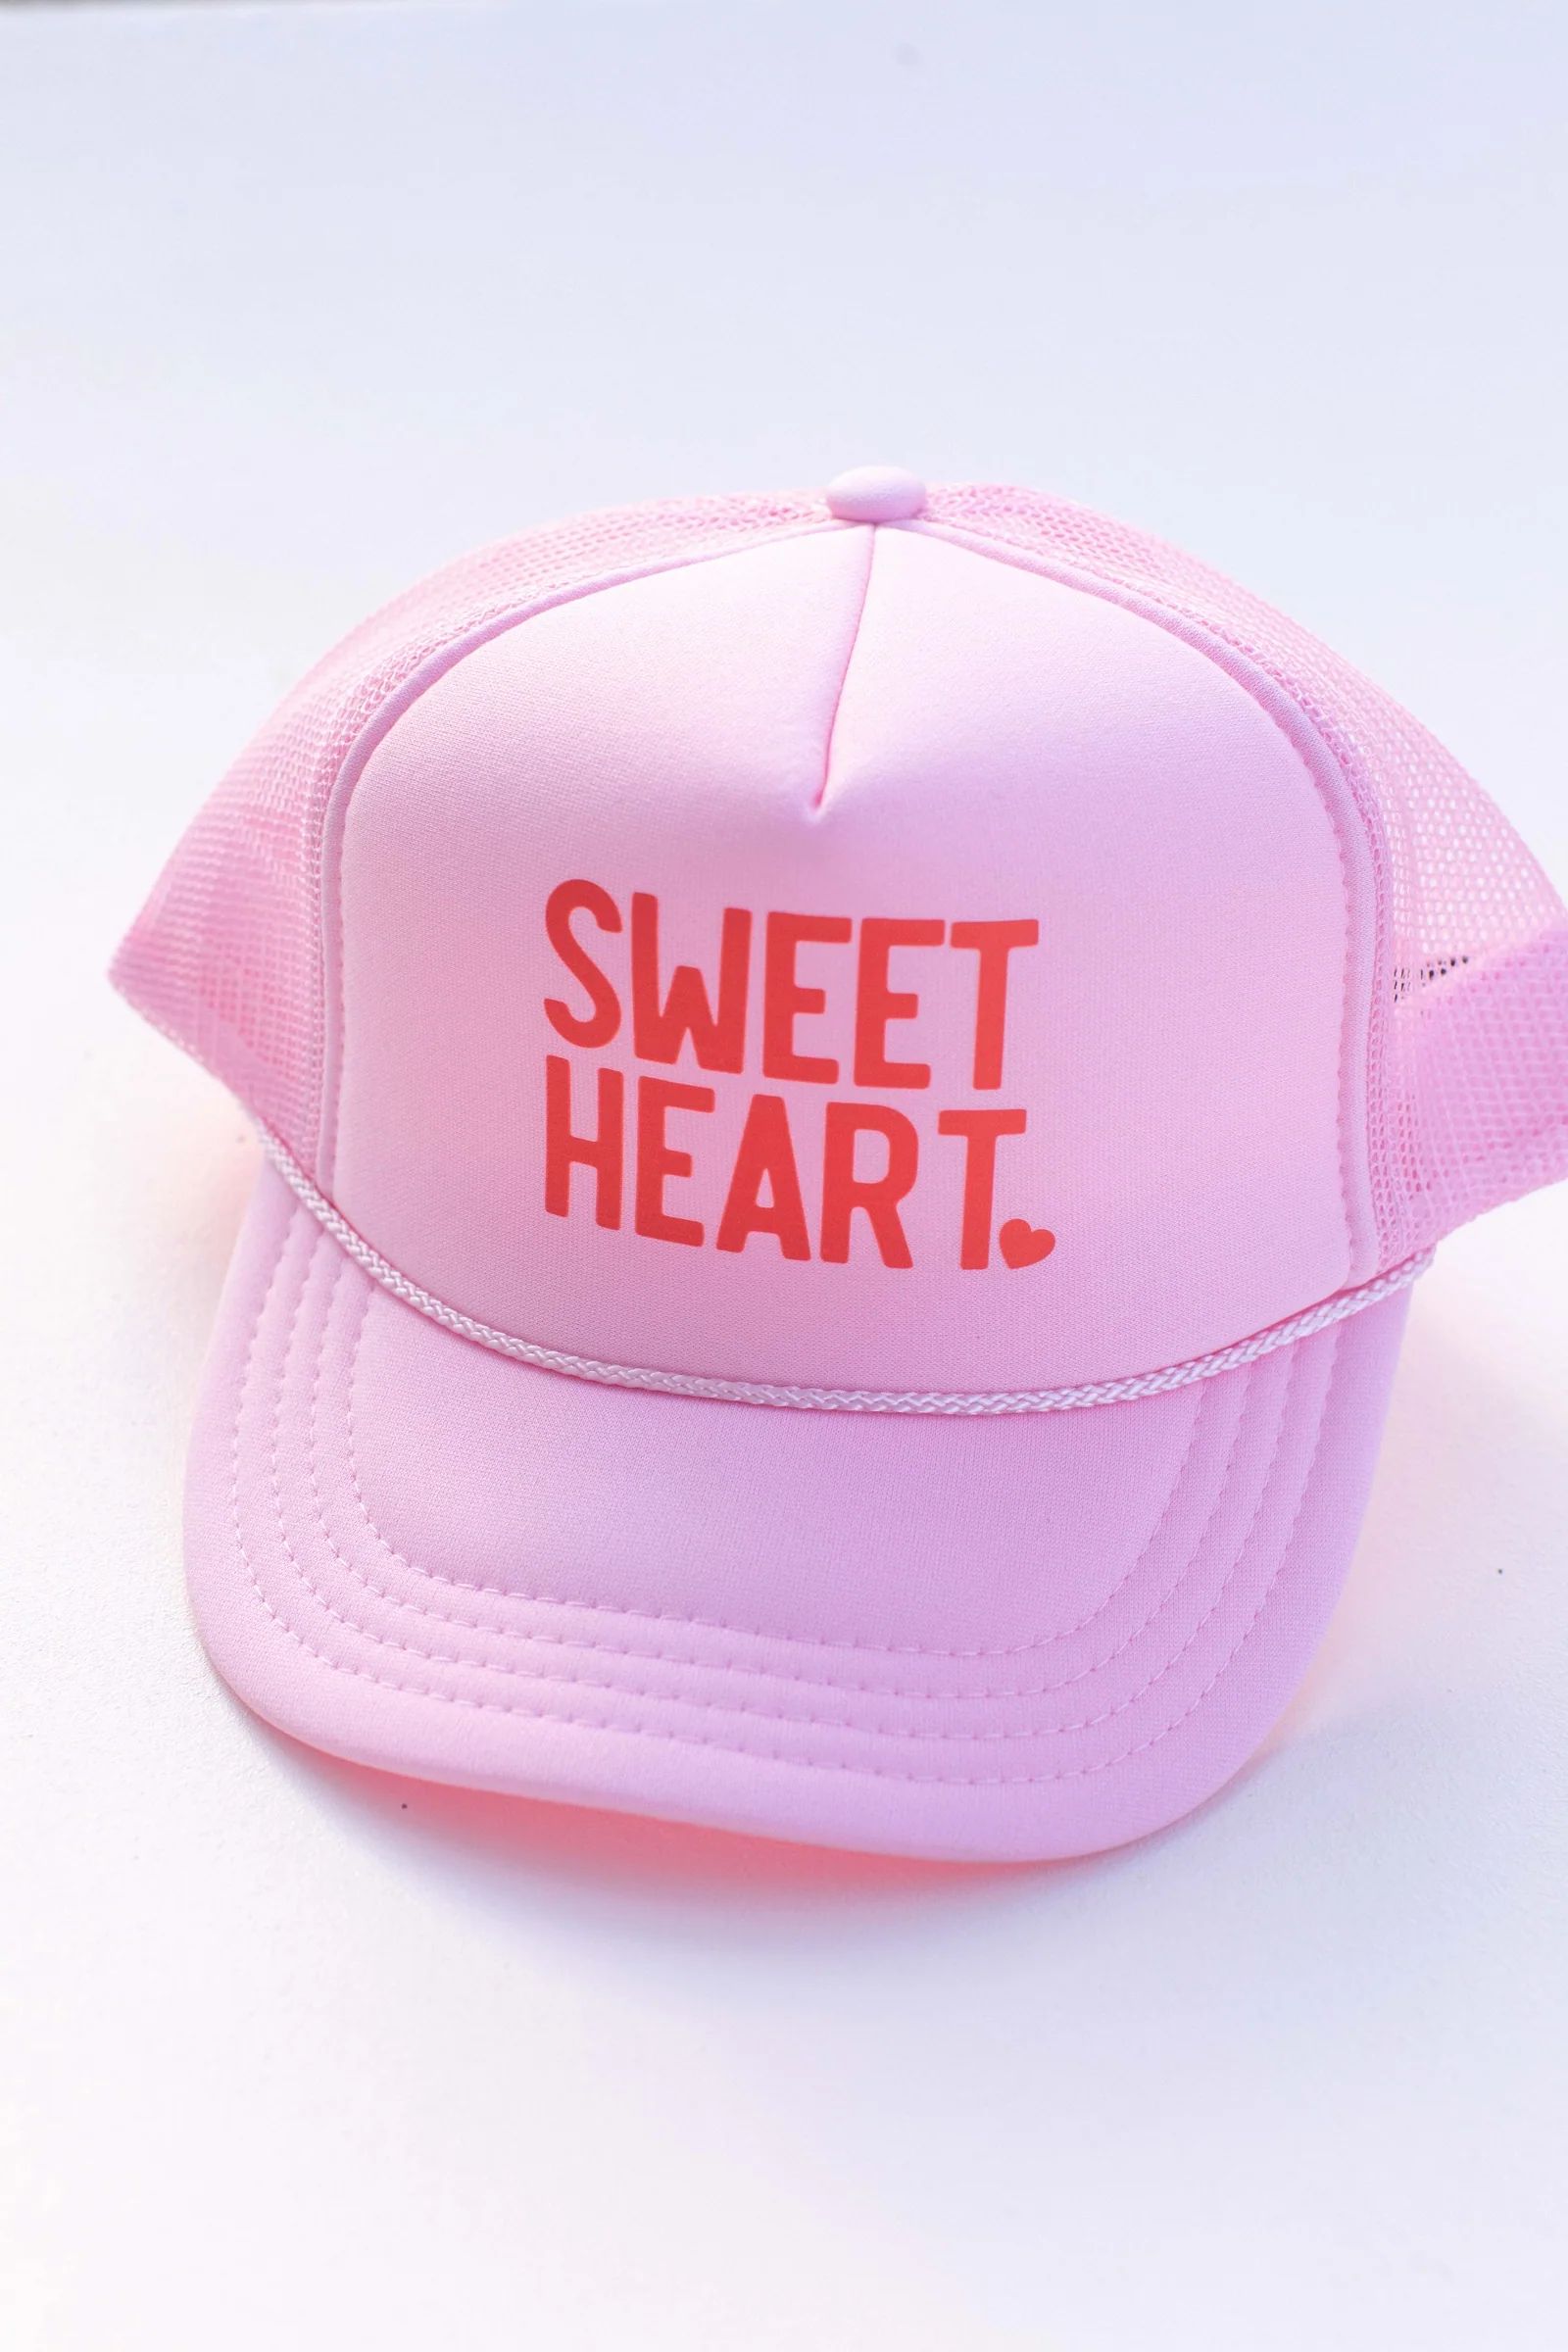 Sweetheart Trucker Hat | Pink possum